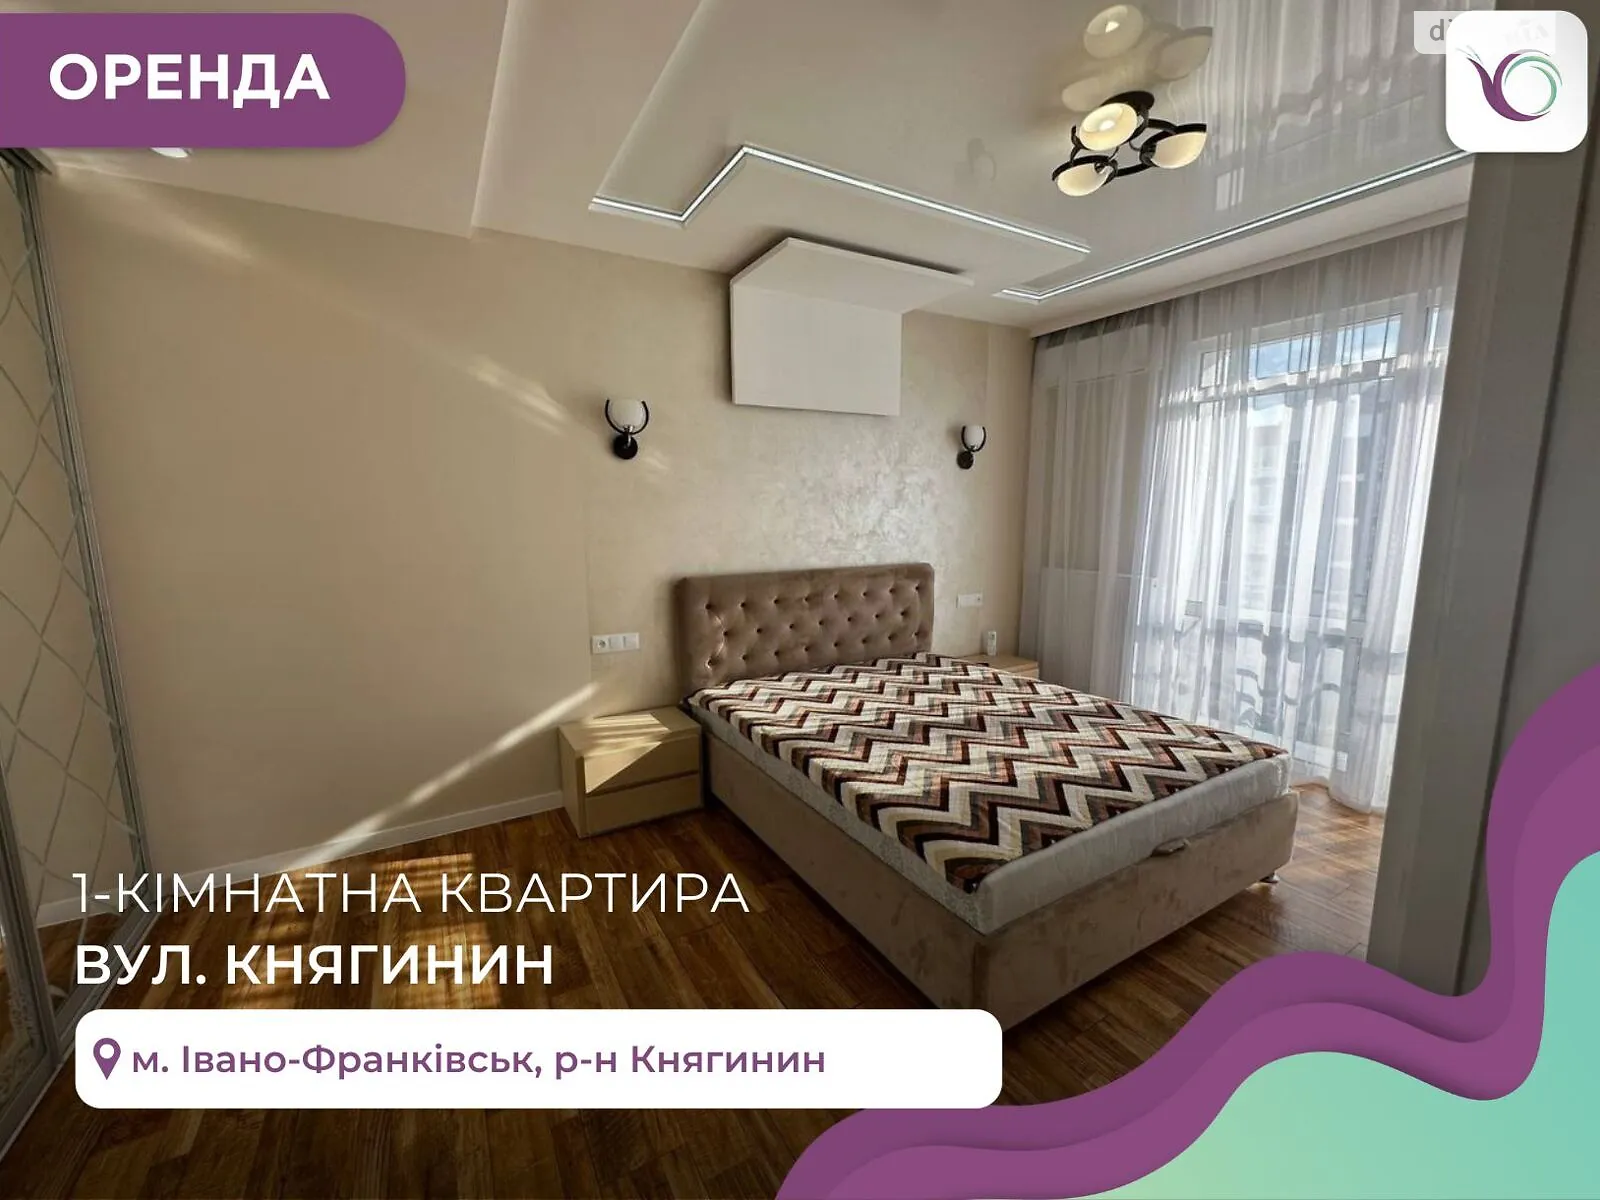 Сдается в аренду 1-комнатная квартира 50 кв. м в Ивано-Франковске, ул. Княгинин